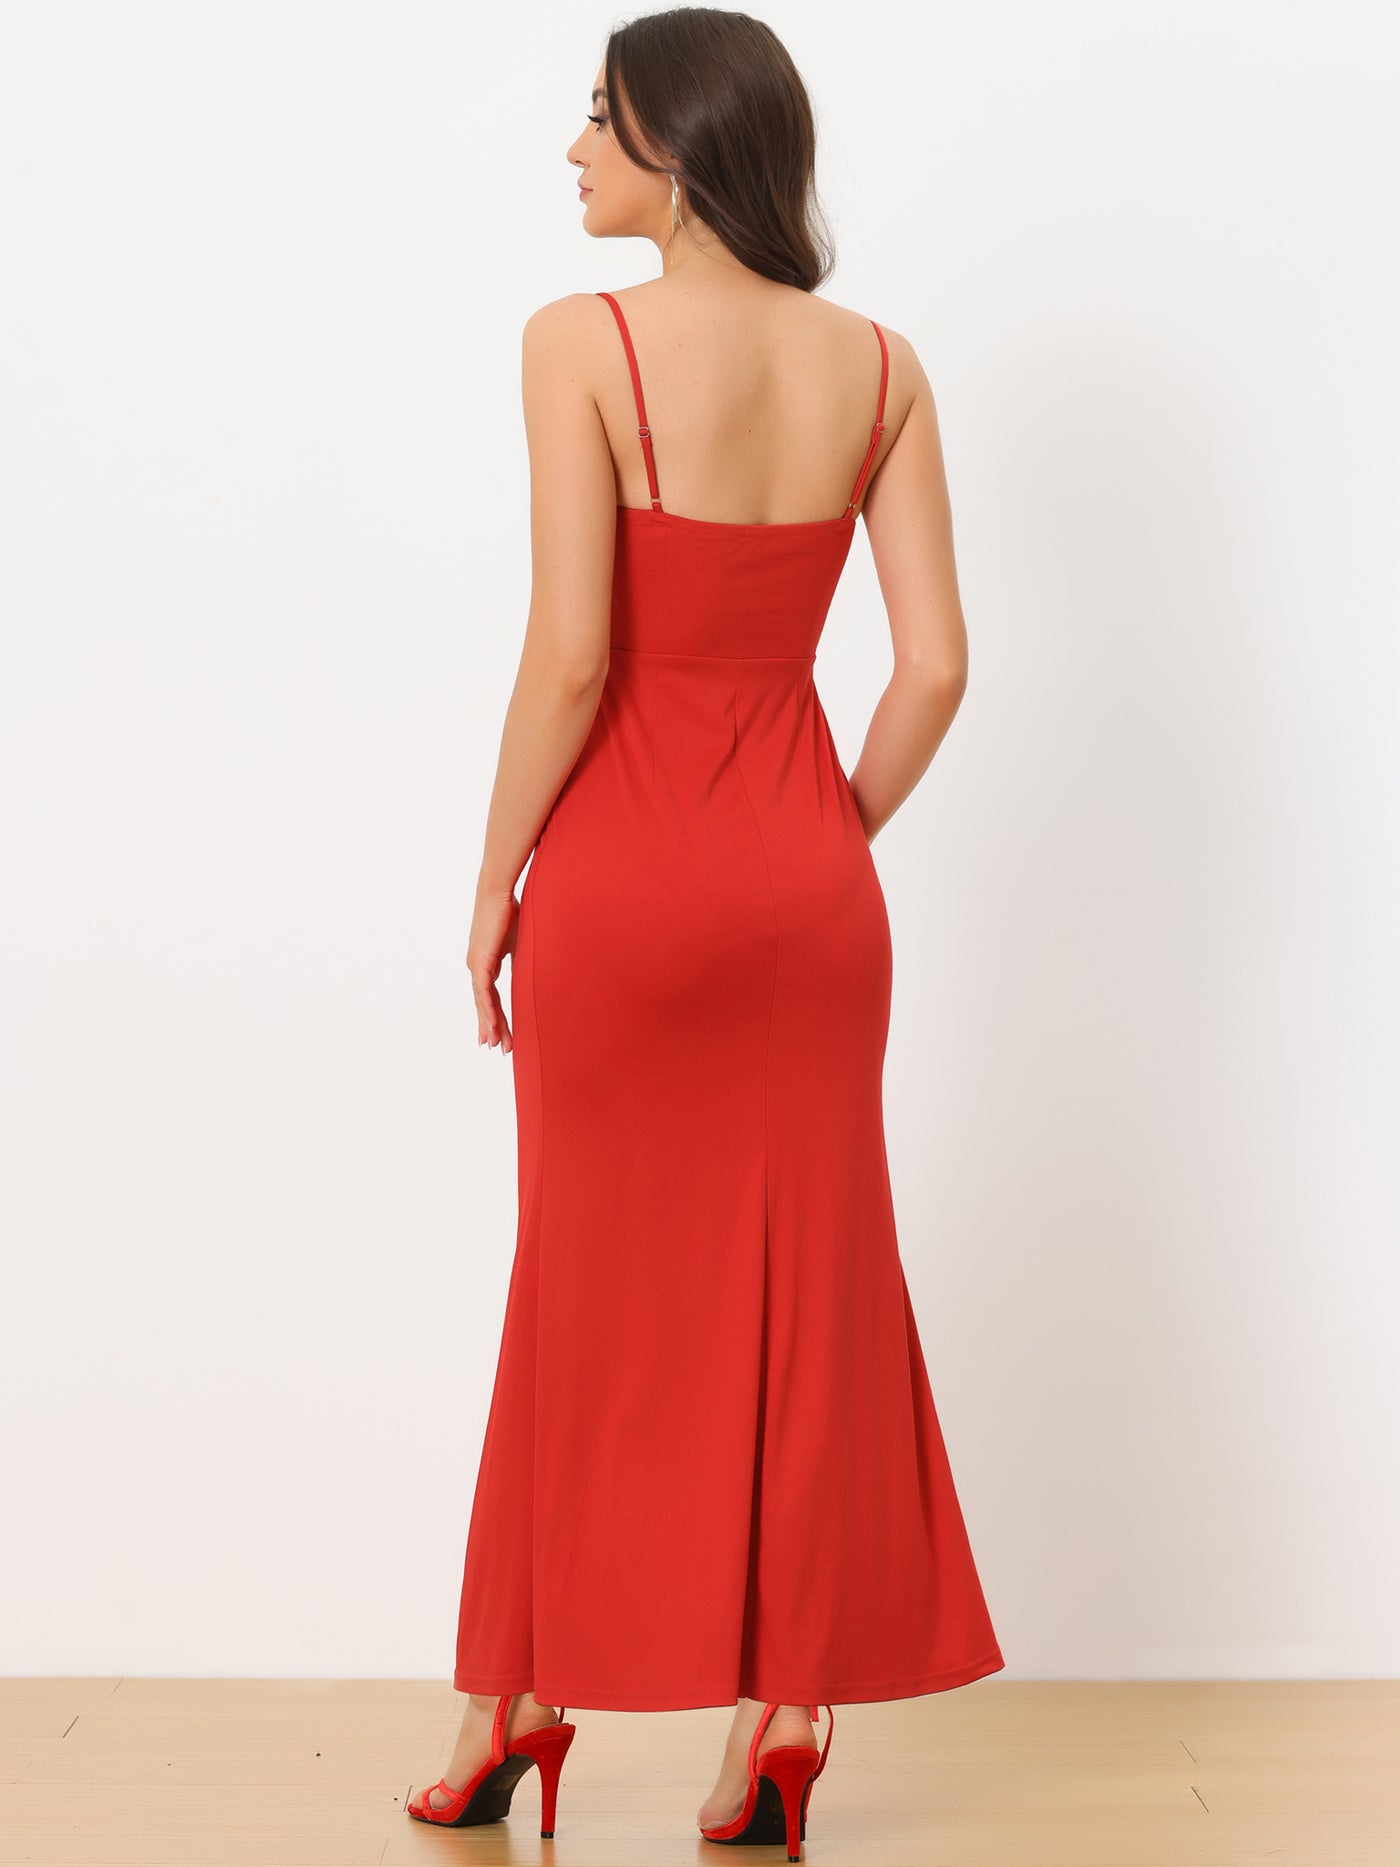 Allegra K Elegant Evening Dresses for Women's Spaghetti Strap Bodycon Mermaid Maxi Dress